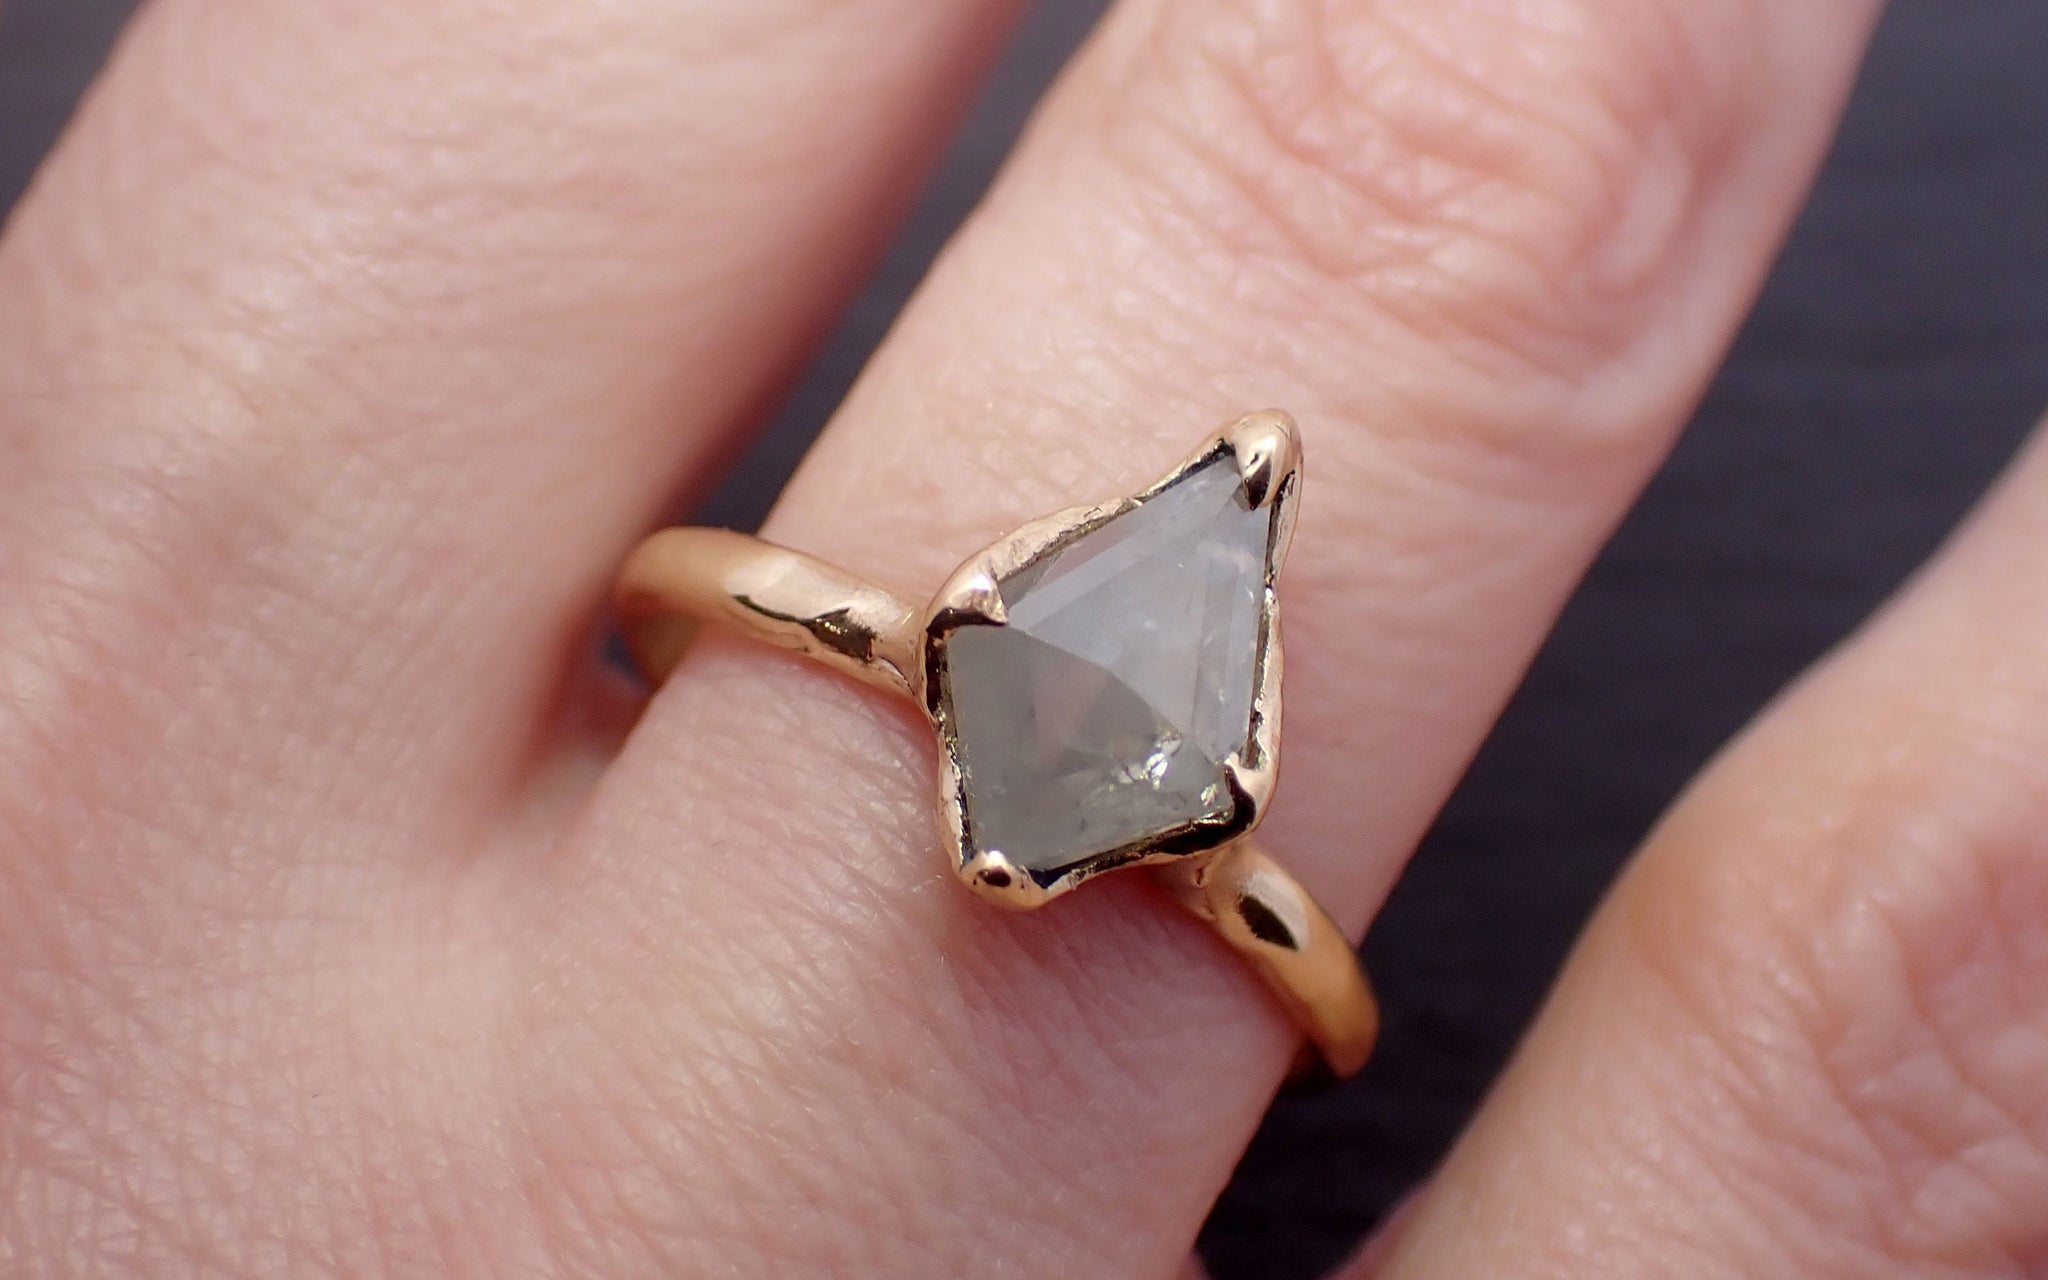 Fancy cut white Diamond Solitaire Engagement 18k yellow Gold Wedding Ring byAngeline 3284